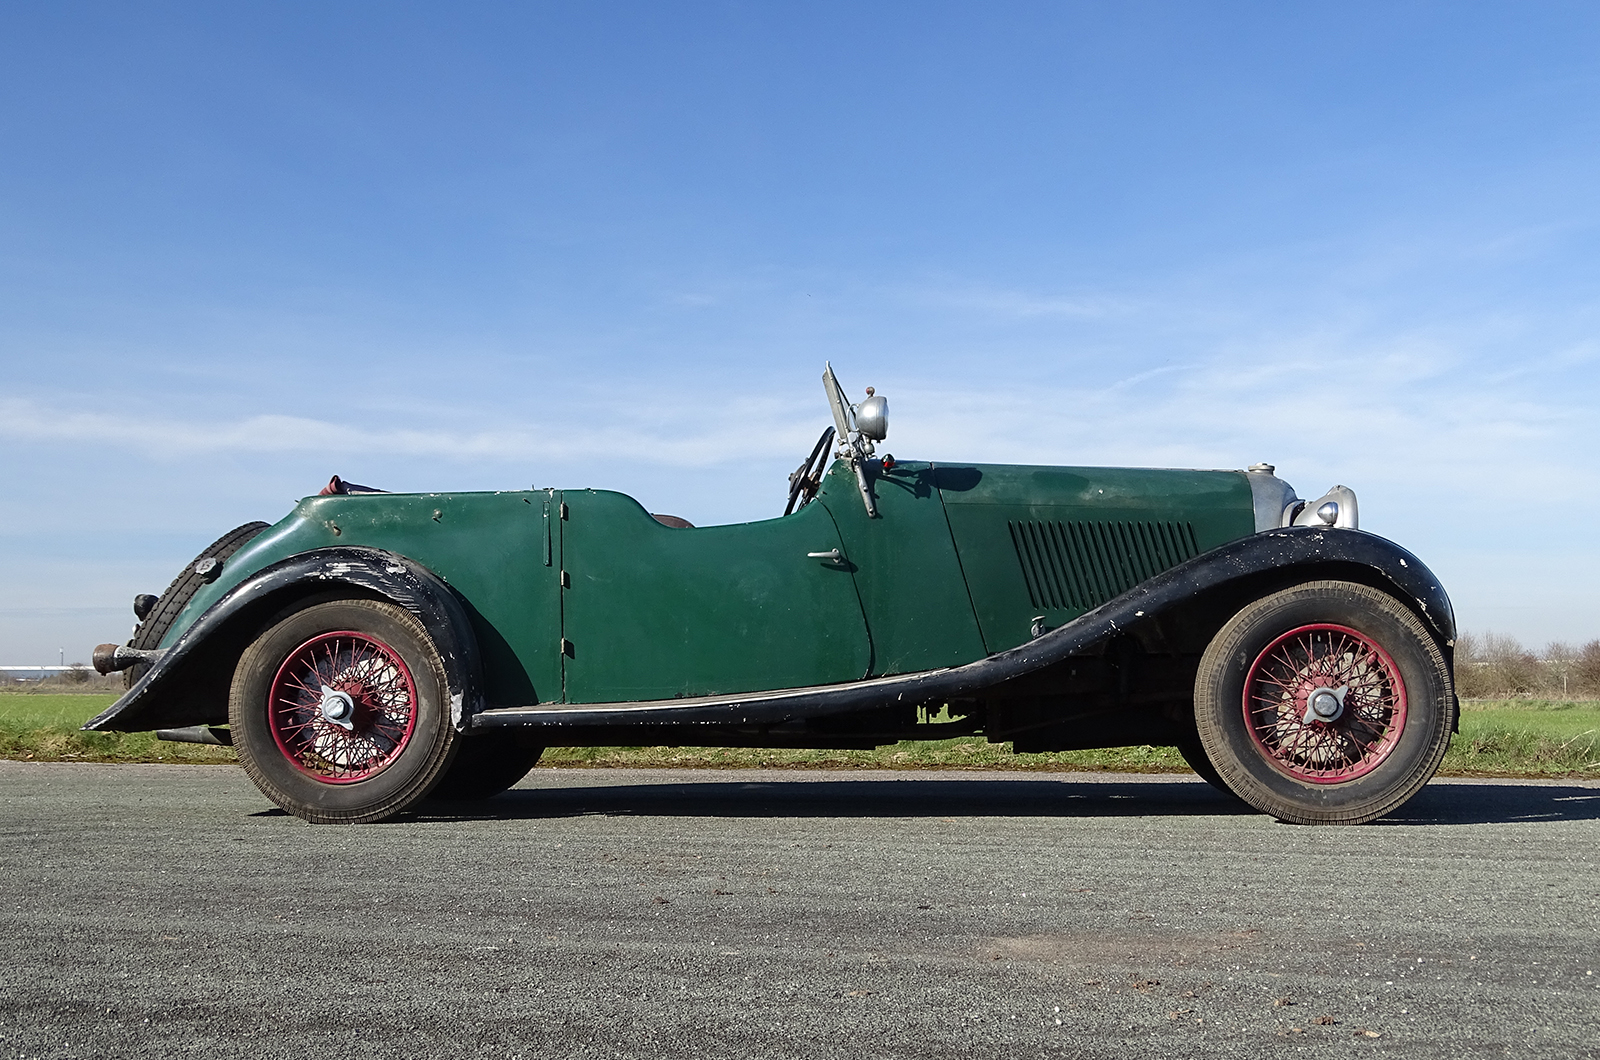 Classic & Sports Car – Big result for unique barn-find Bentley